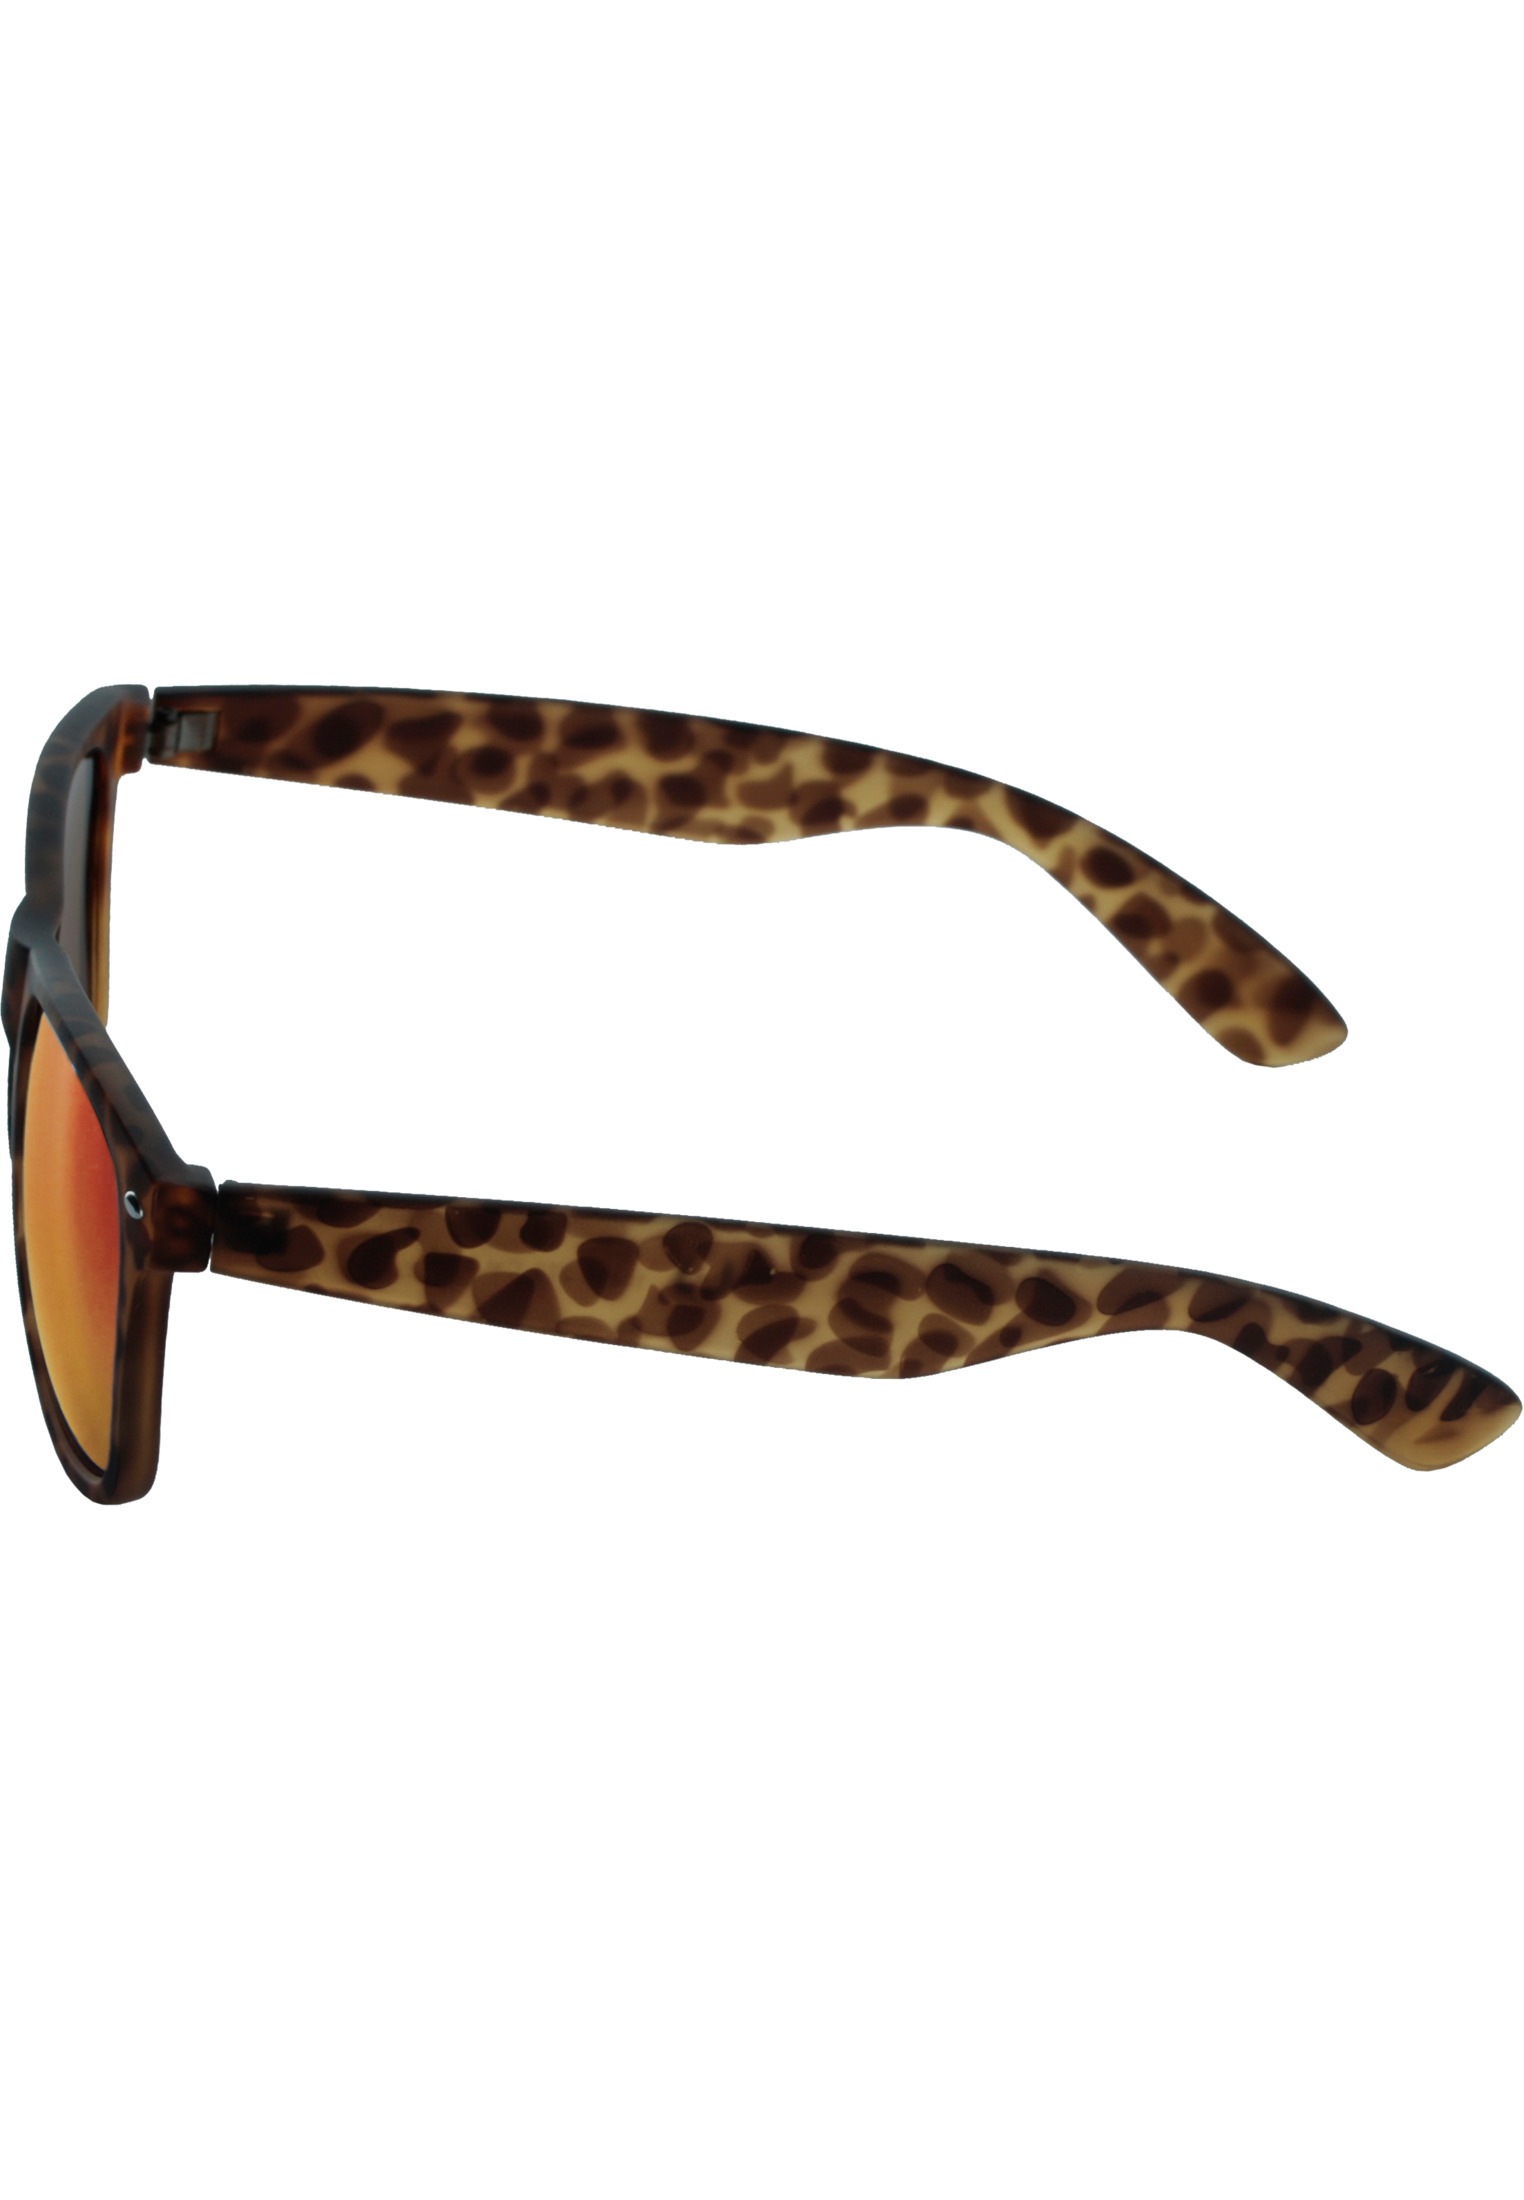 Friday Sonnenbrille Likoma Black | MSTRDS »Accessoires Sunglasses Mirror« BAUR